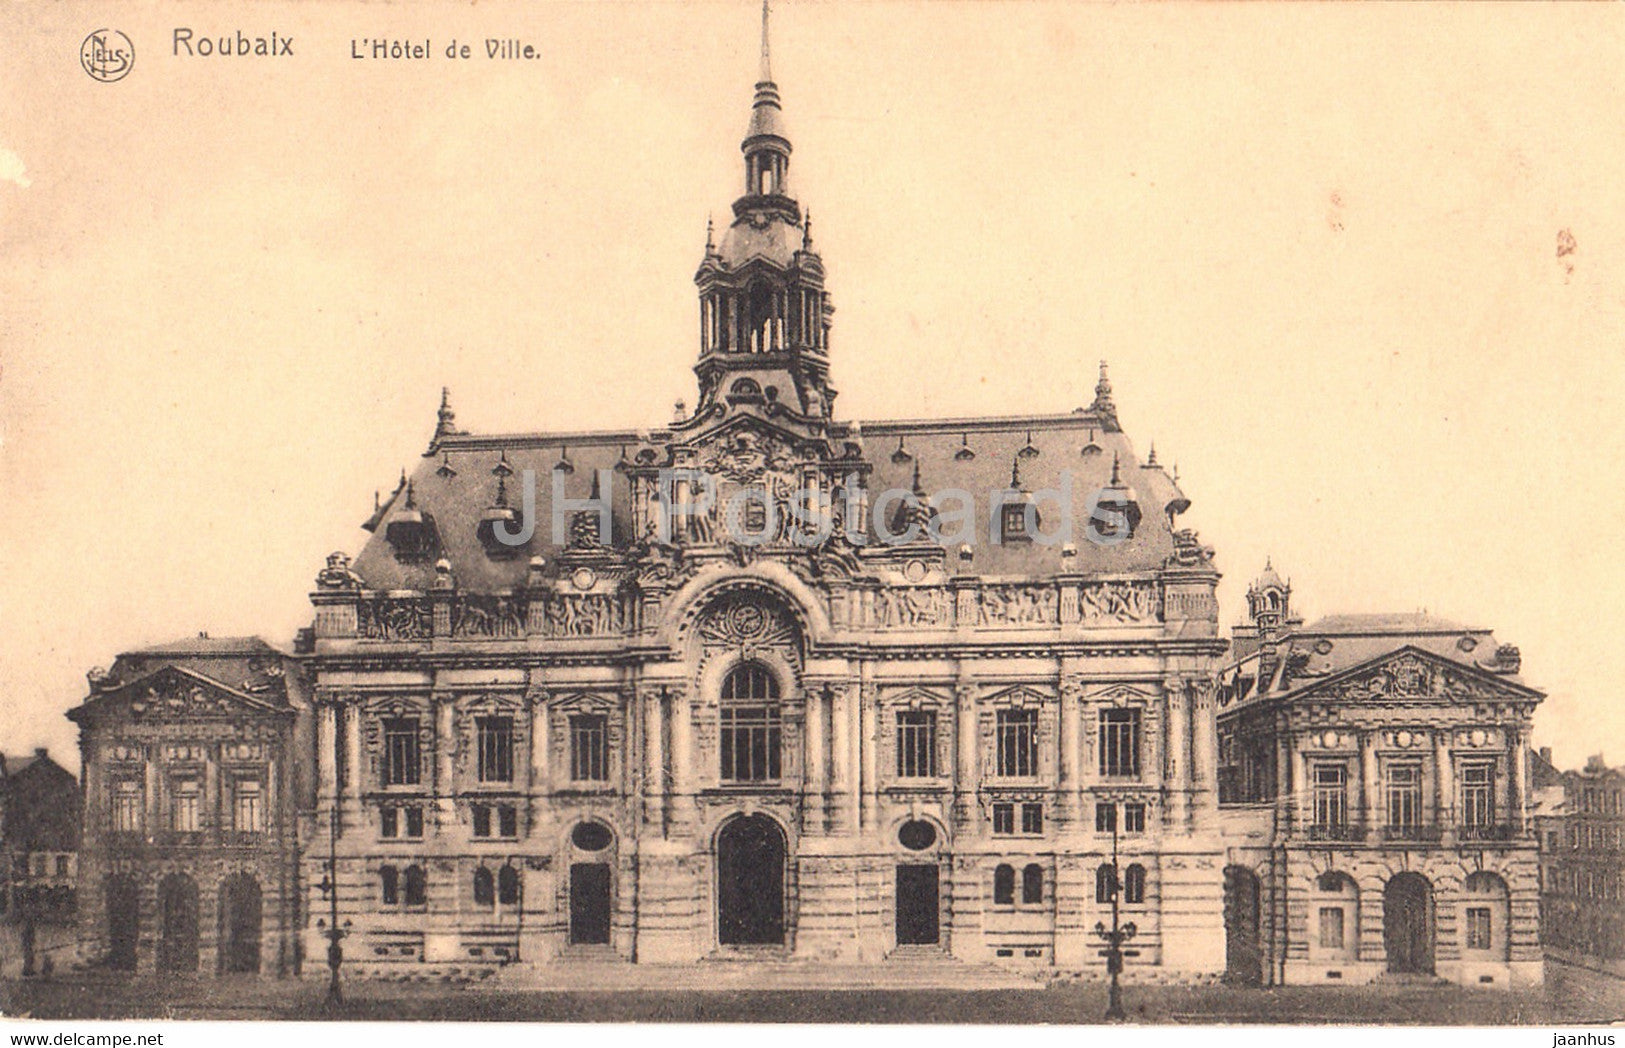 Roubaix - L'Hotel de Ville - hotel - old postcard - France - used - JH Postcards